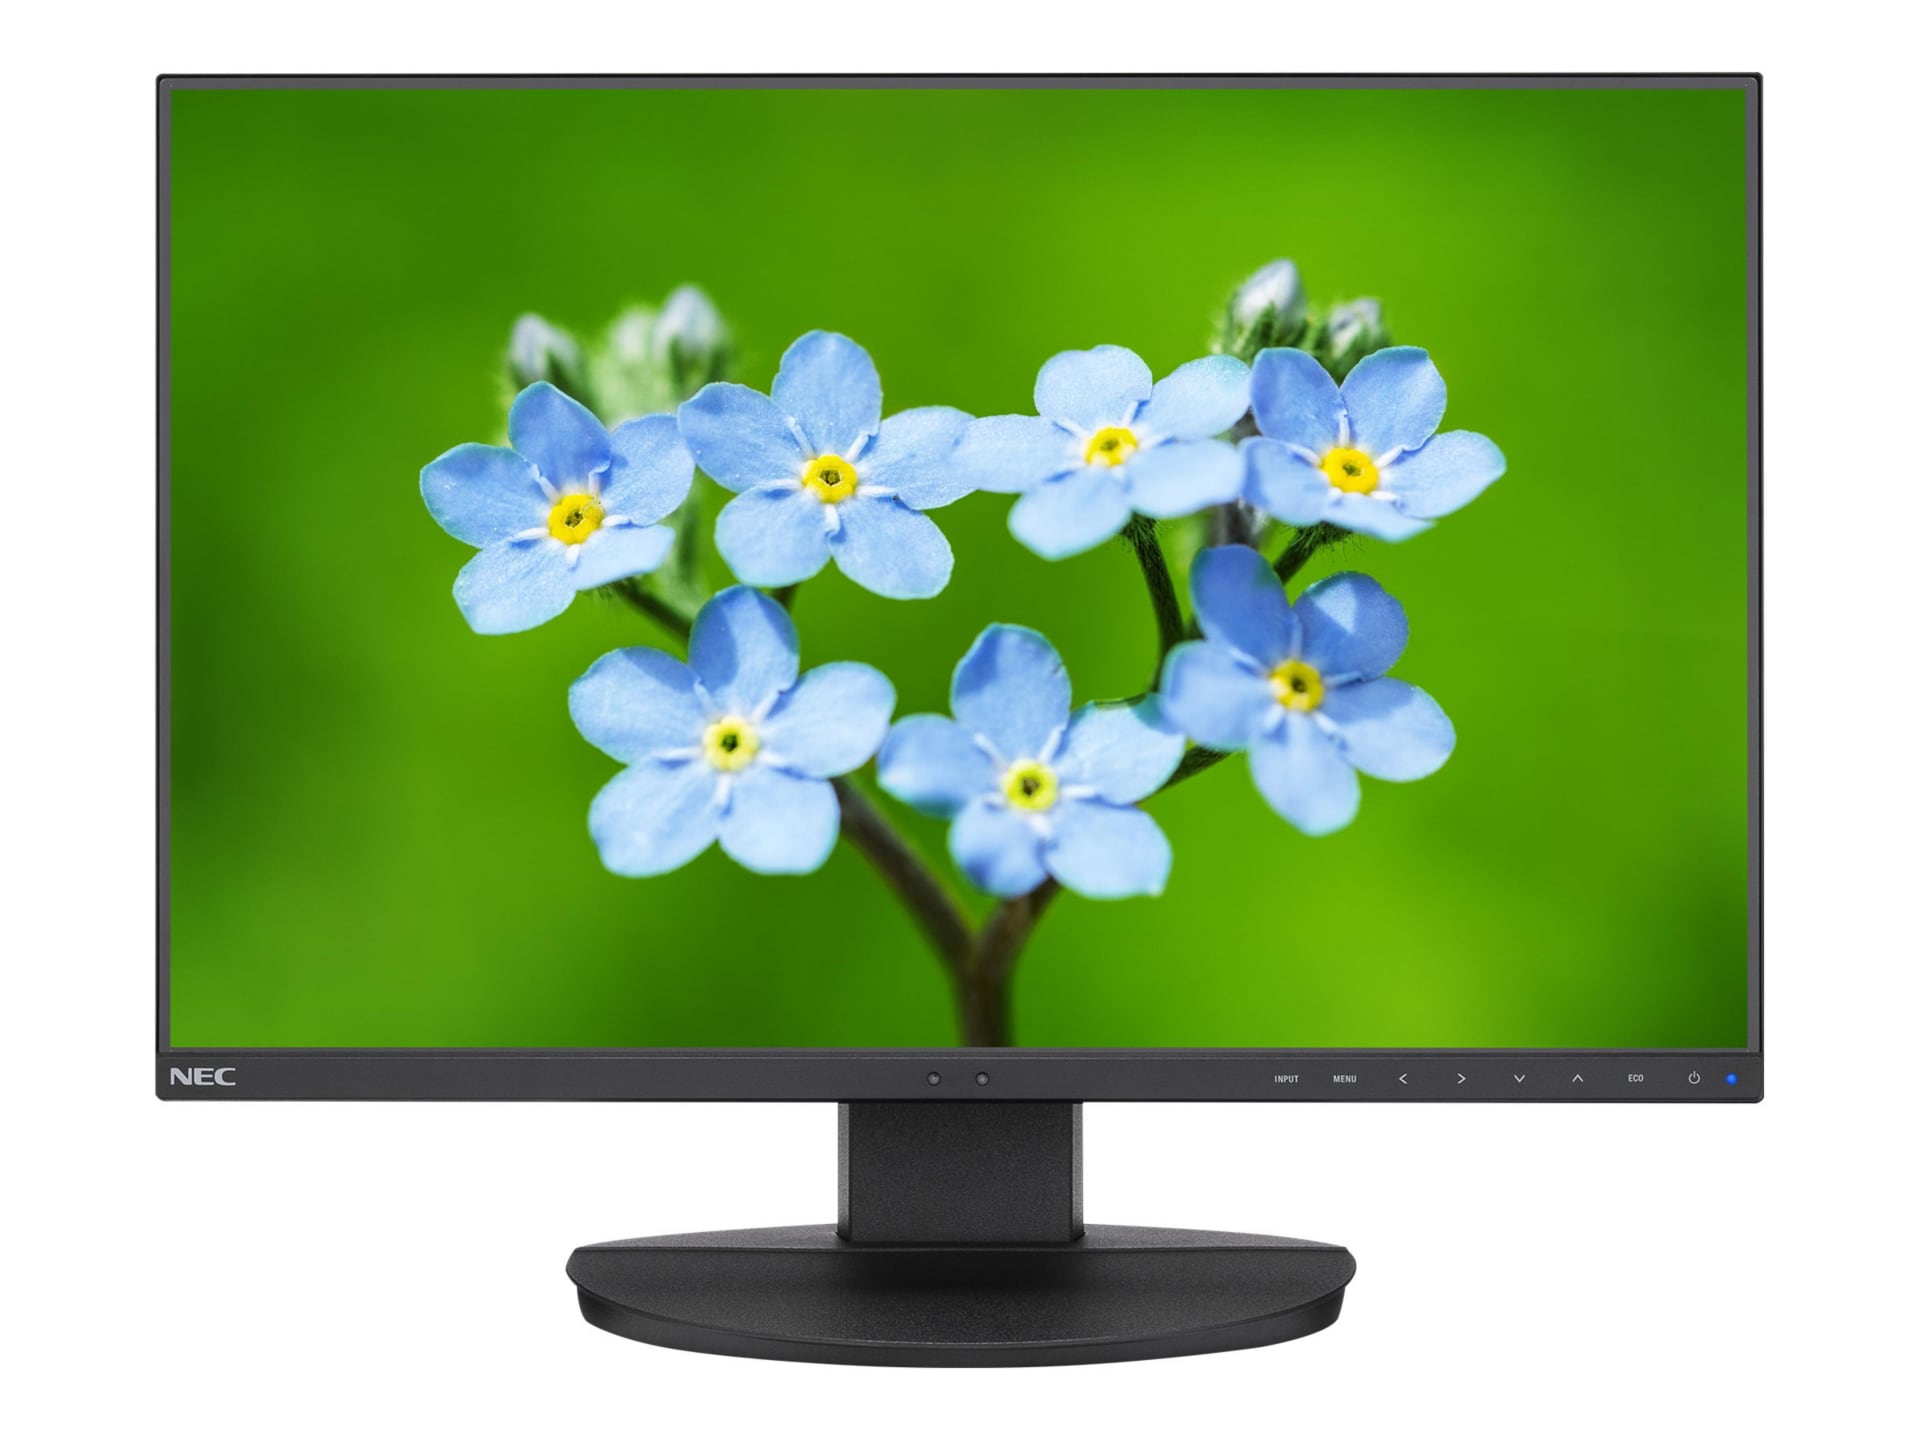 NEC 23" WUXGA Business-Class Widescreen Desktop Monitor - Black